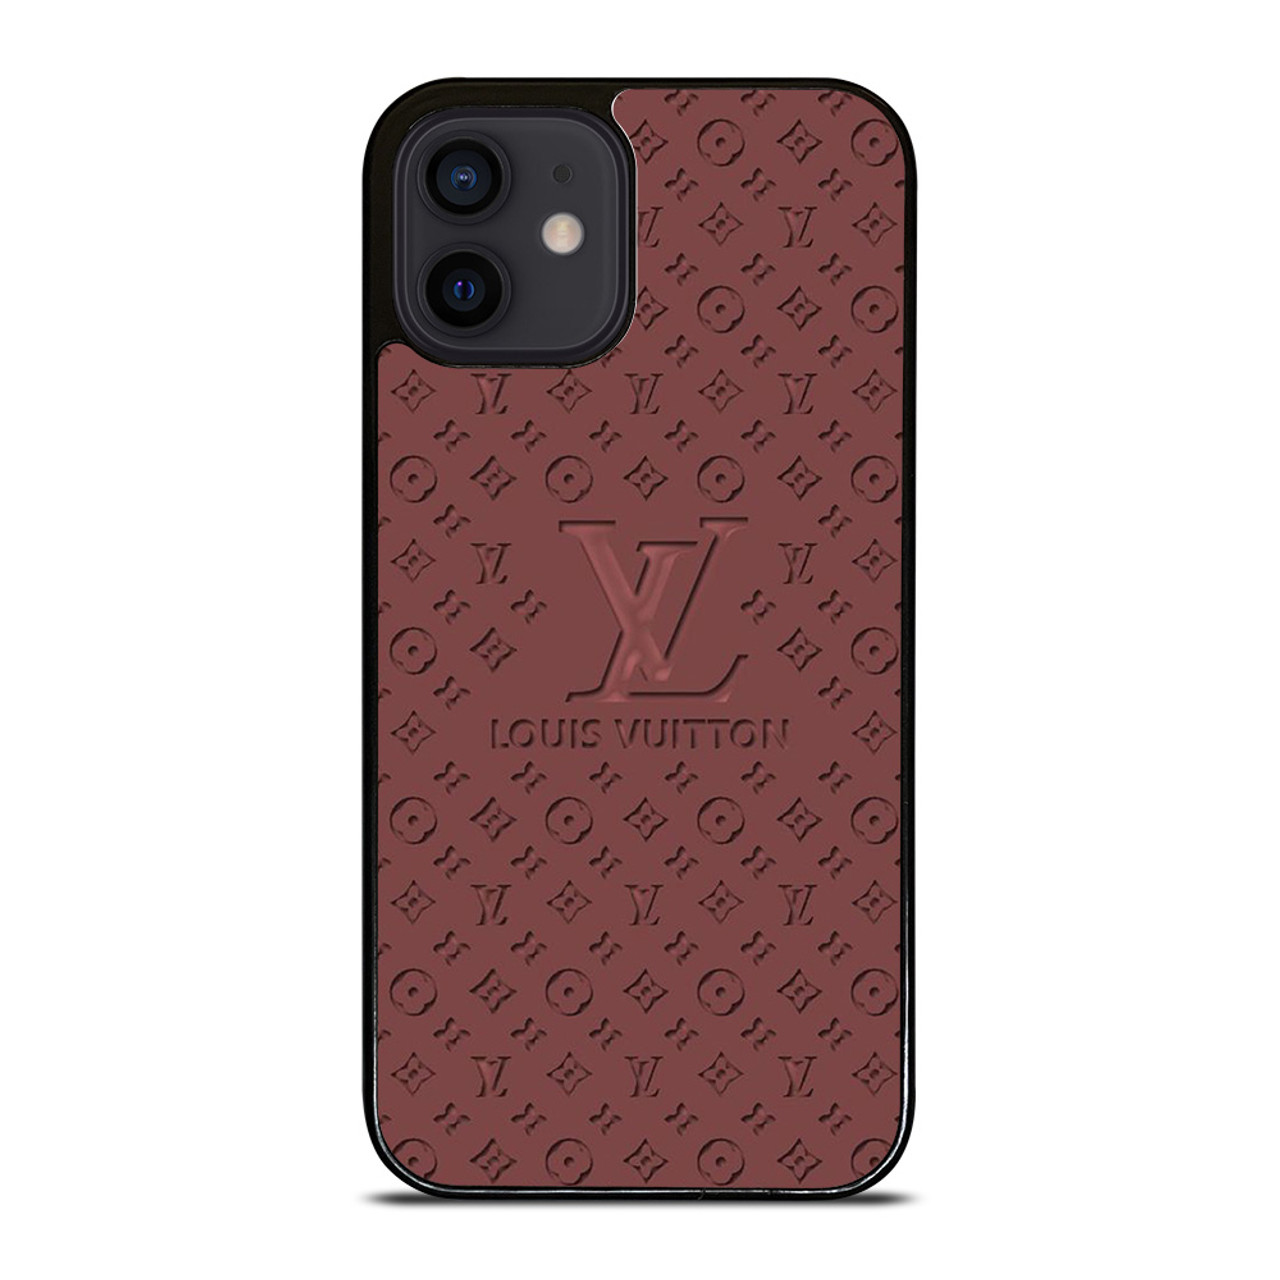 LOUIS VUITTON LV LOGO PINK iPhone 12 Mini Case Cover